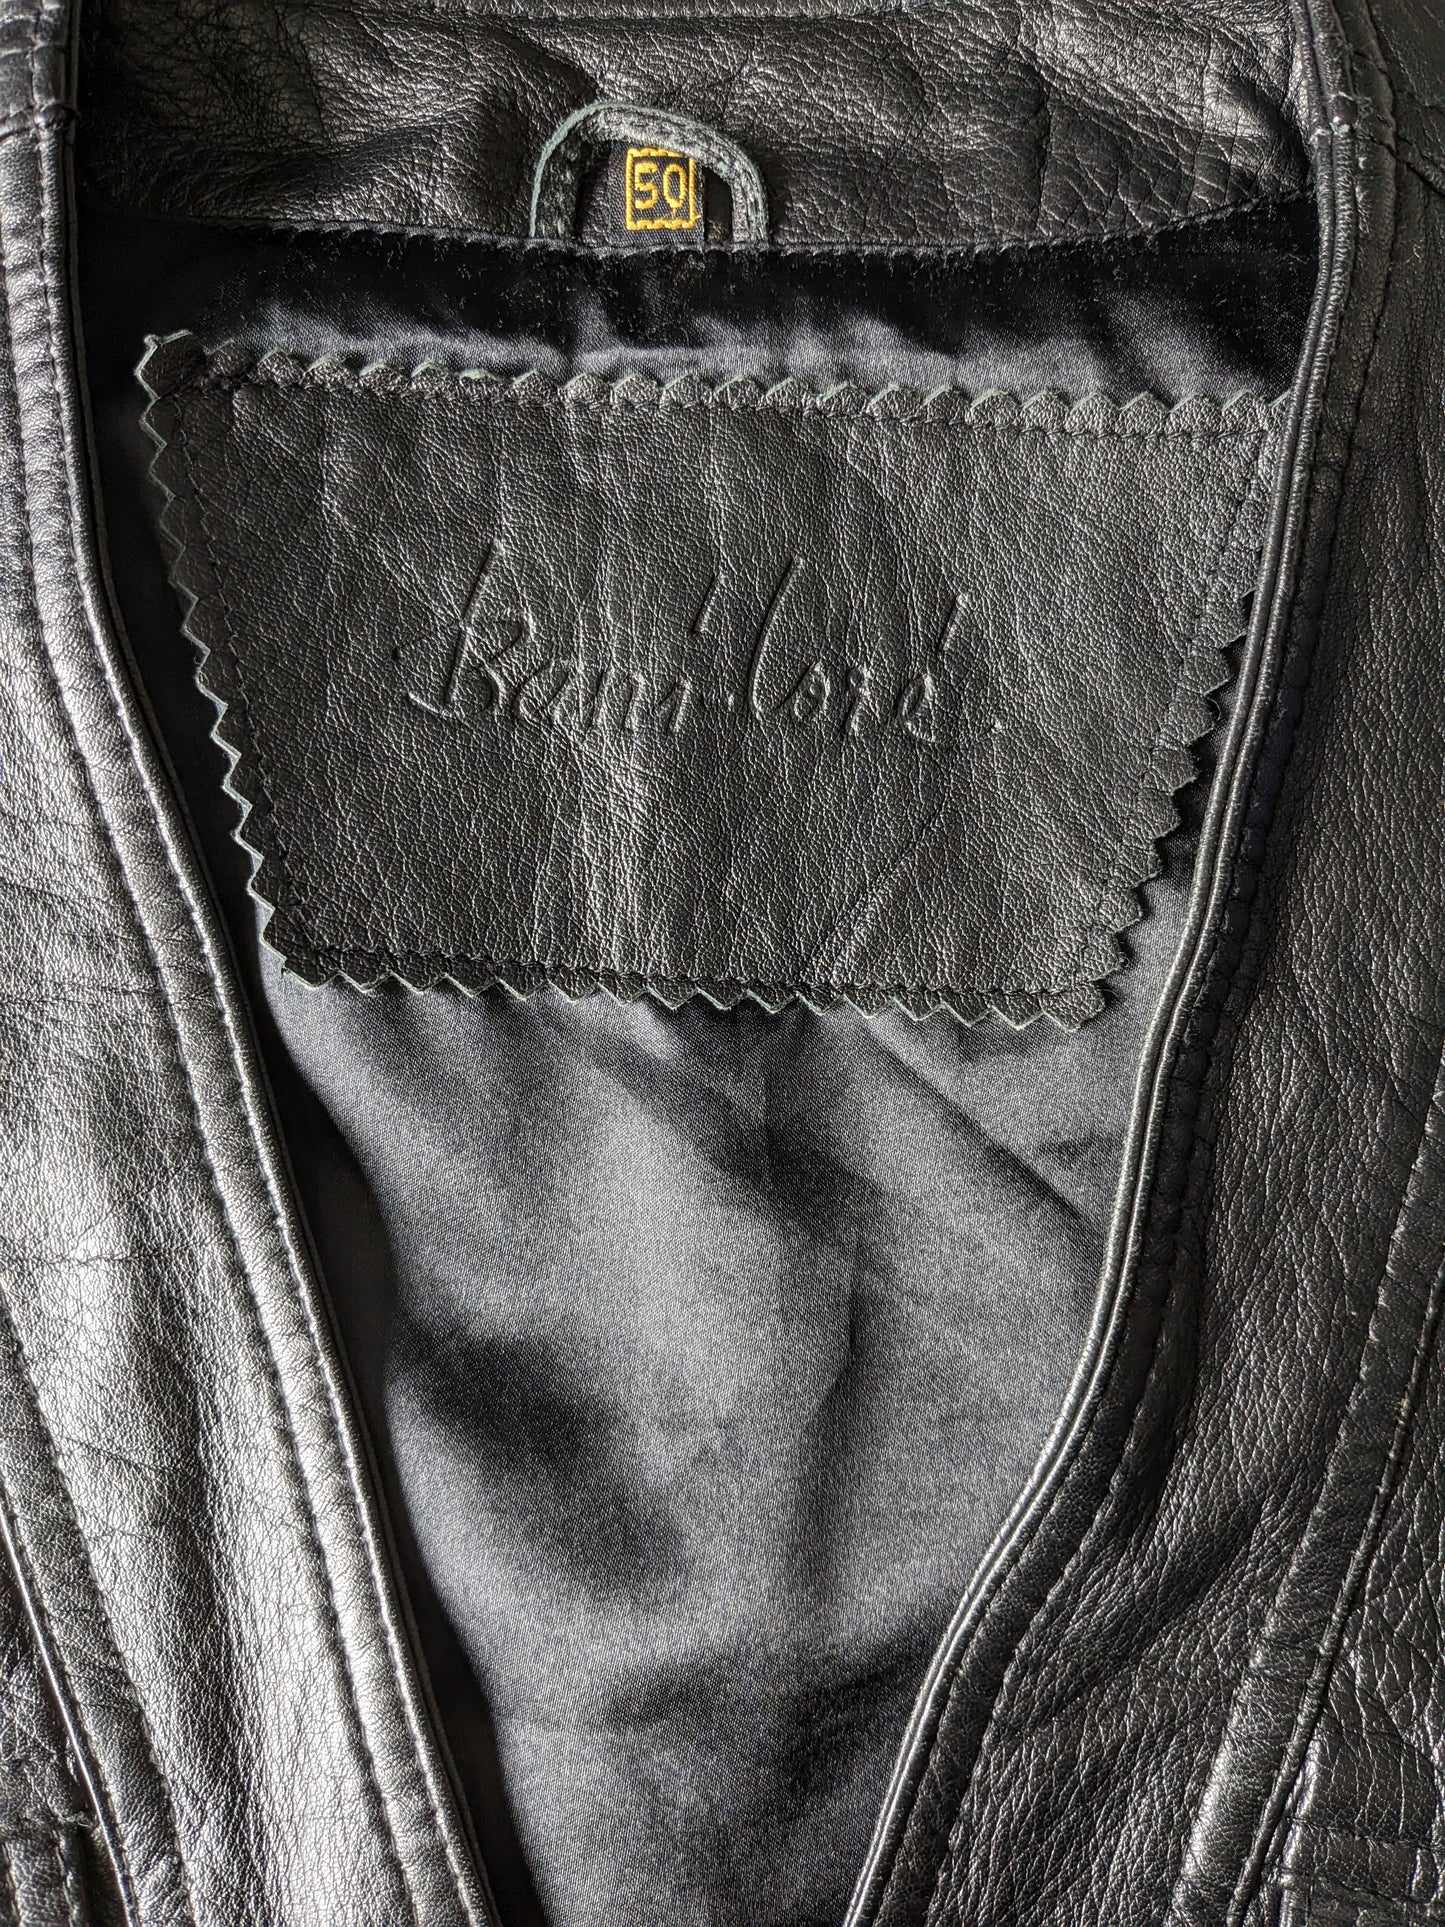 Bani Loré Vintage Leather Body Warmer. Black colored with unique press studs. Size 50/52.